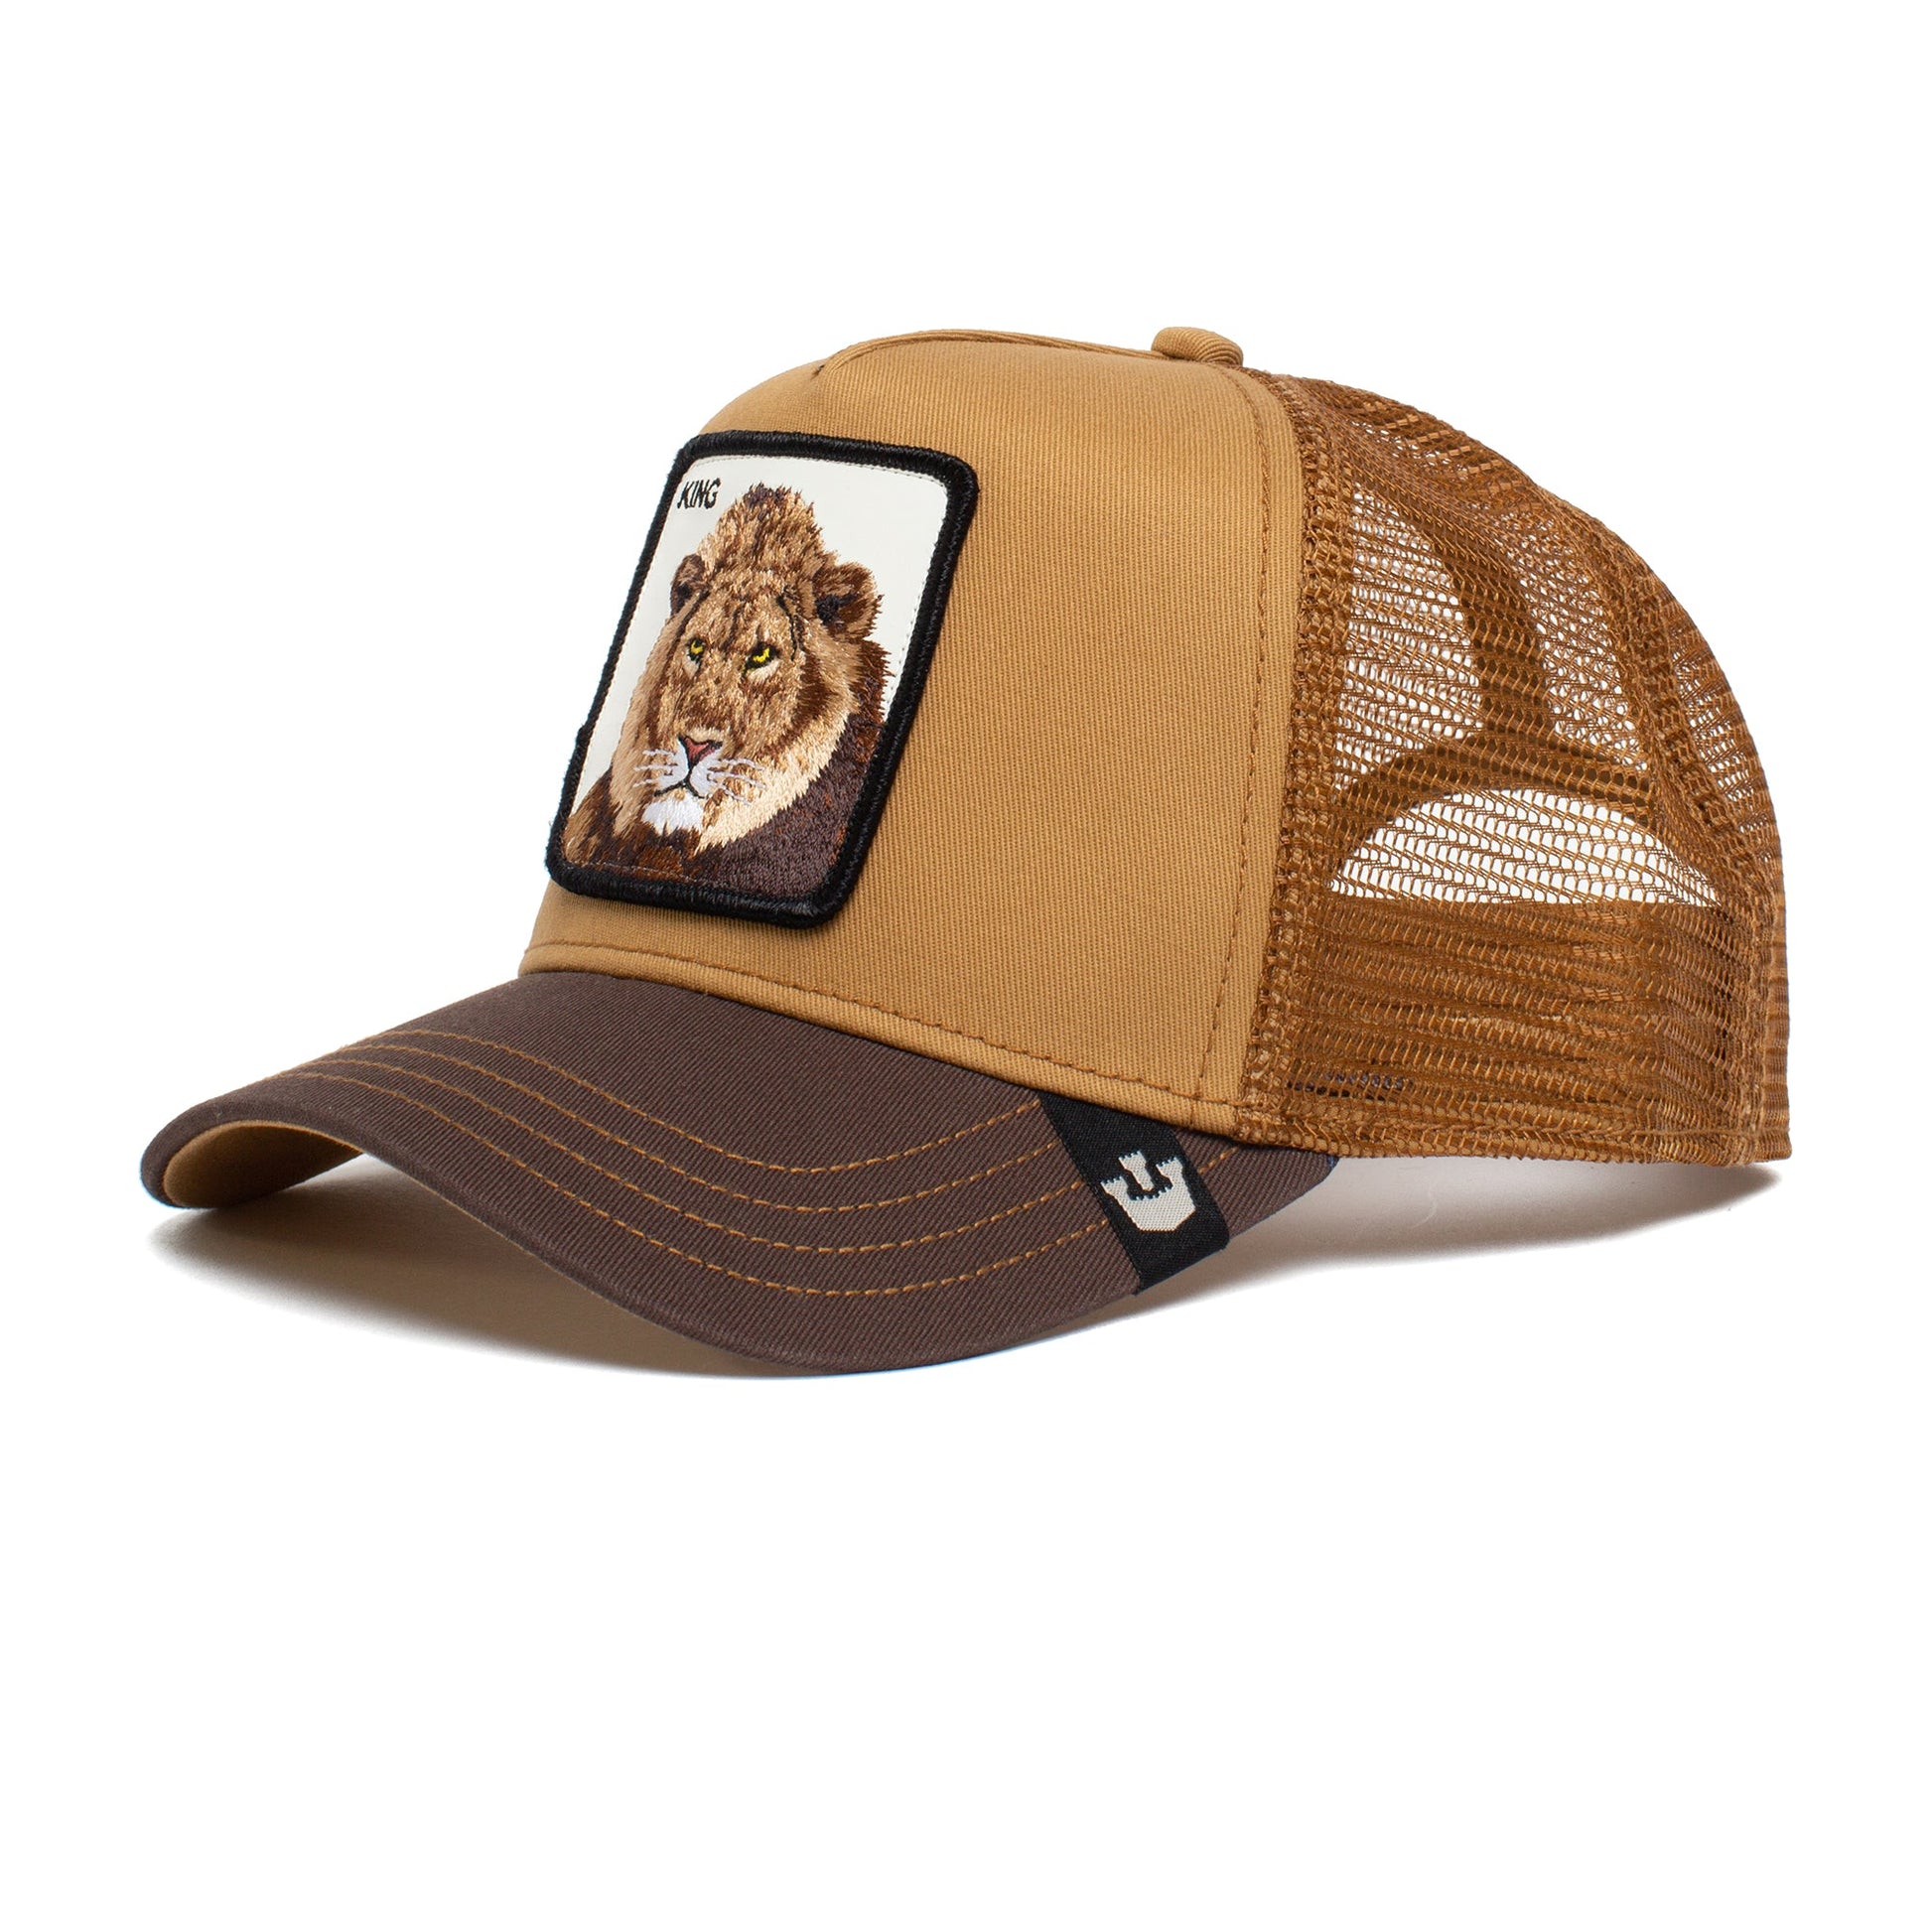 GOORIN - כובע מצחייה THE KING LION בצבע חום - MASHBIR//365